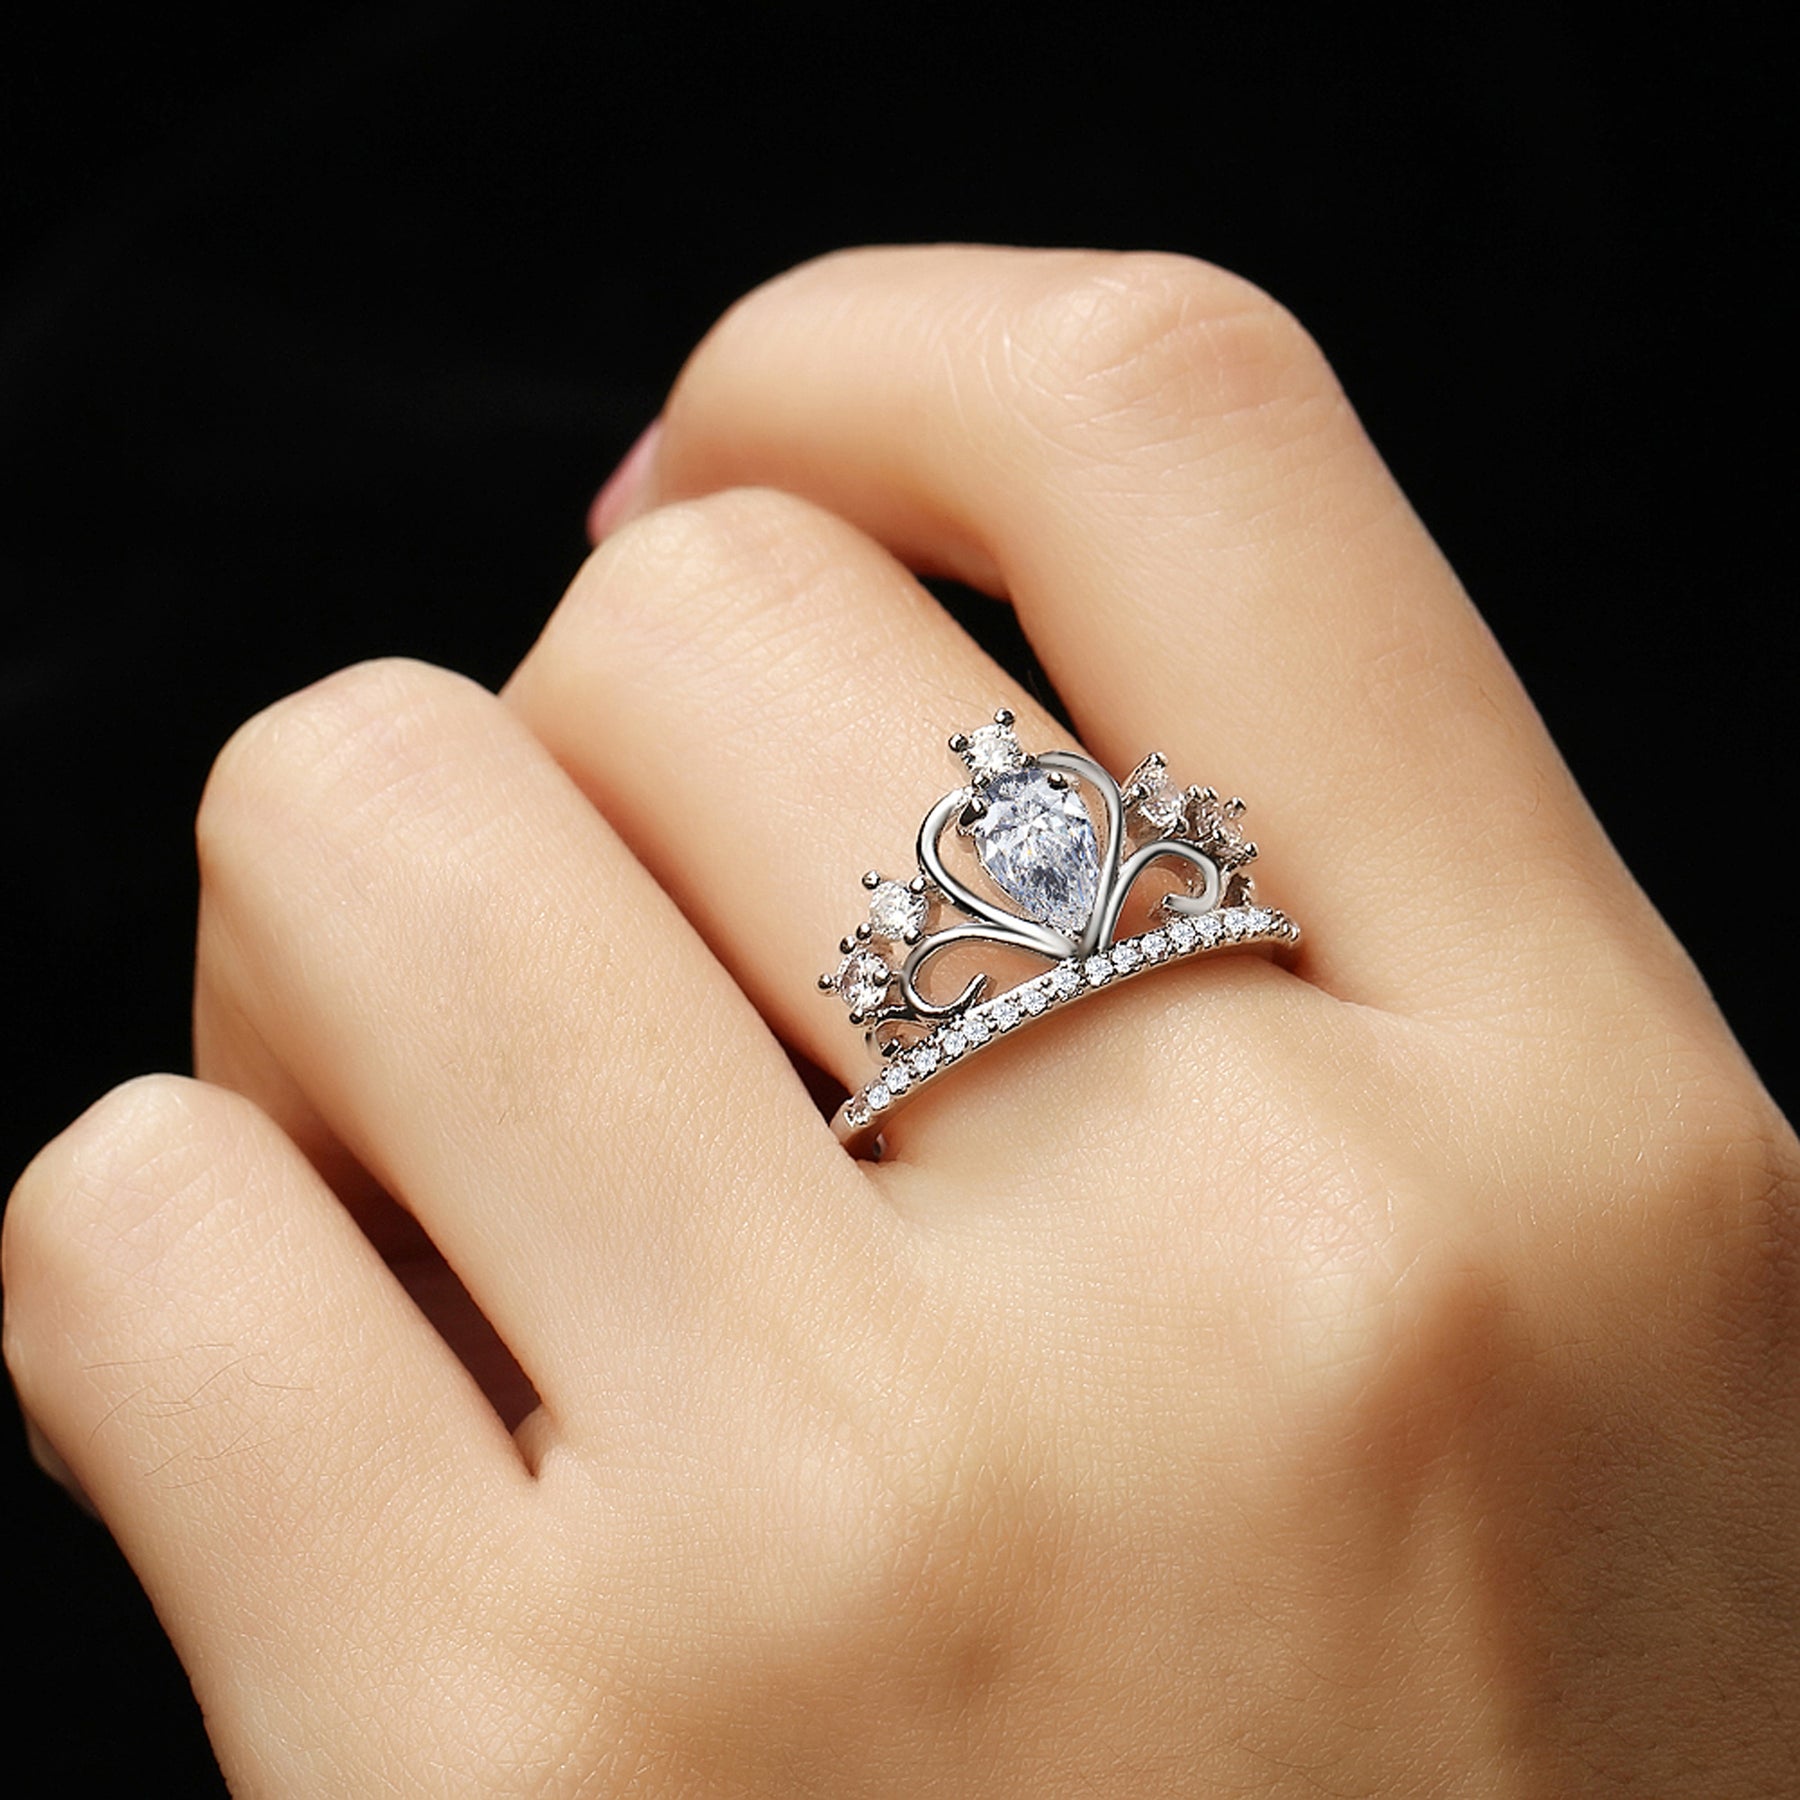 Кольца ташкент. Кольцо Thomas Sabo корона. Кольцо корона Санлайт. Кольцо в форме короны. Кольцо корона на пальце.